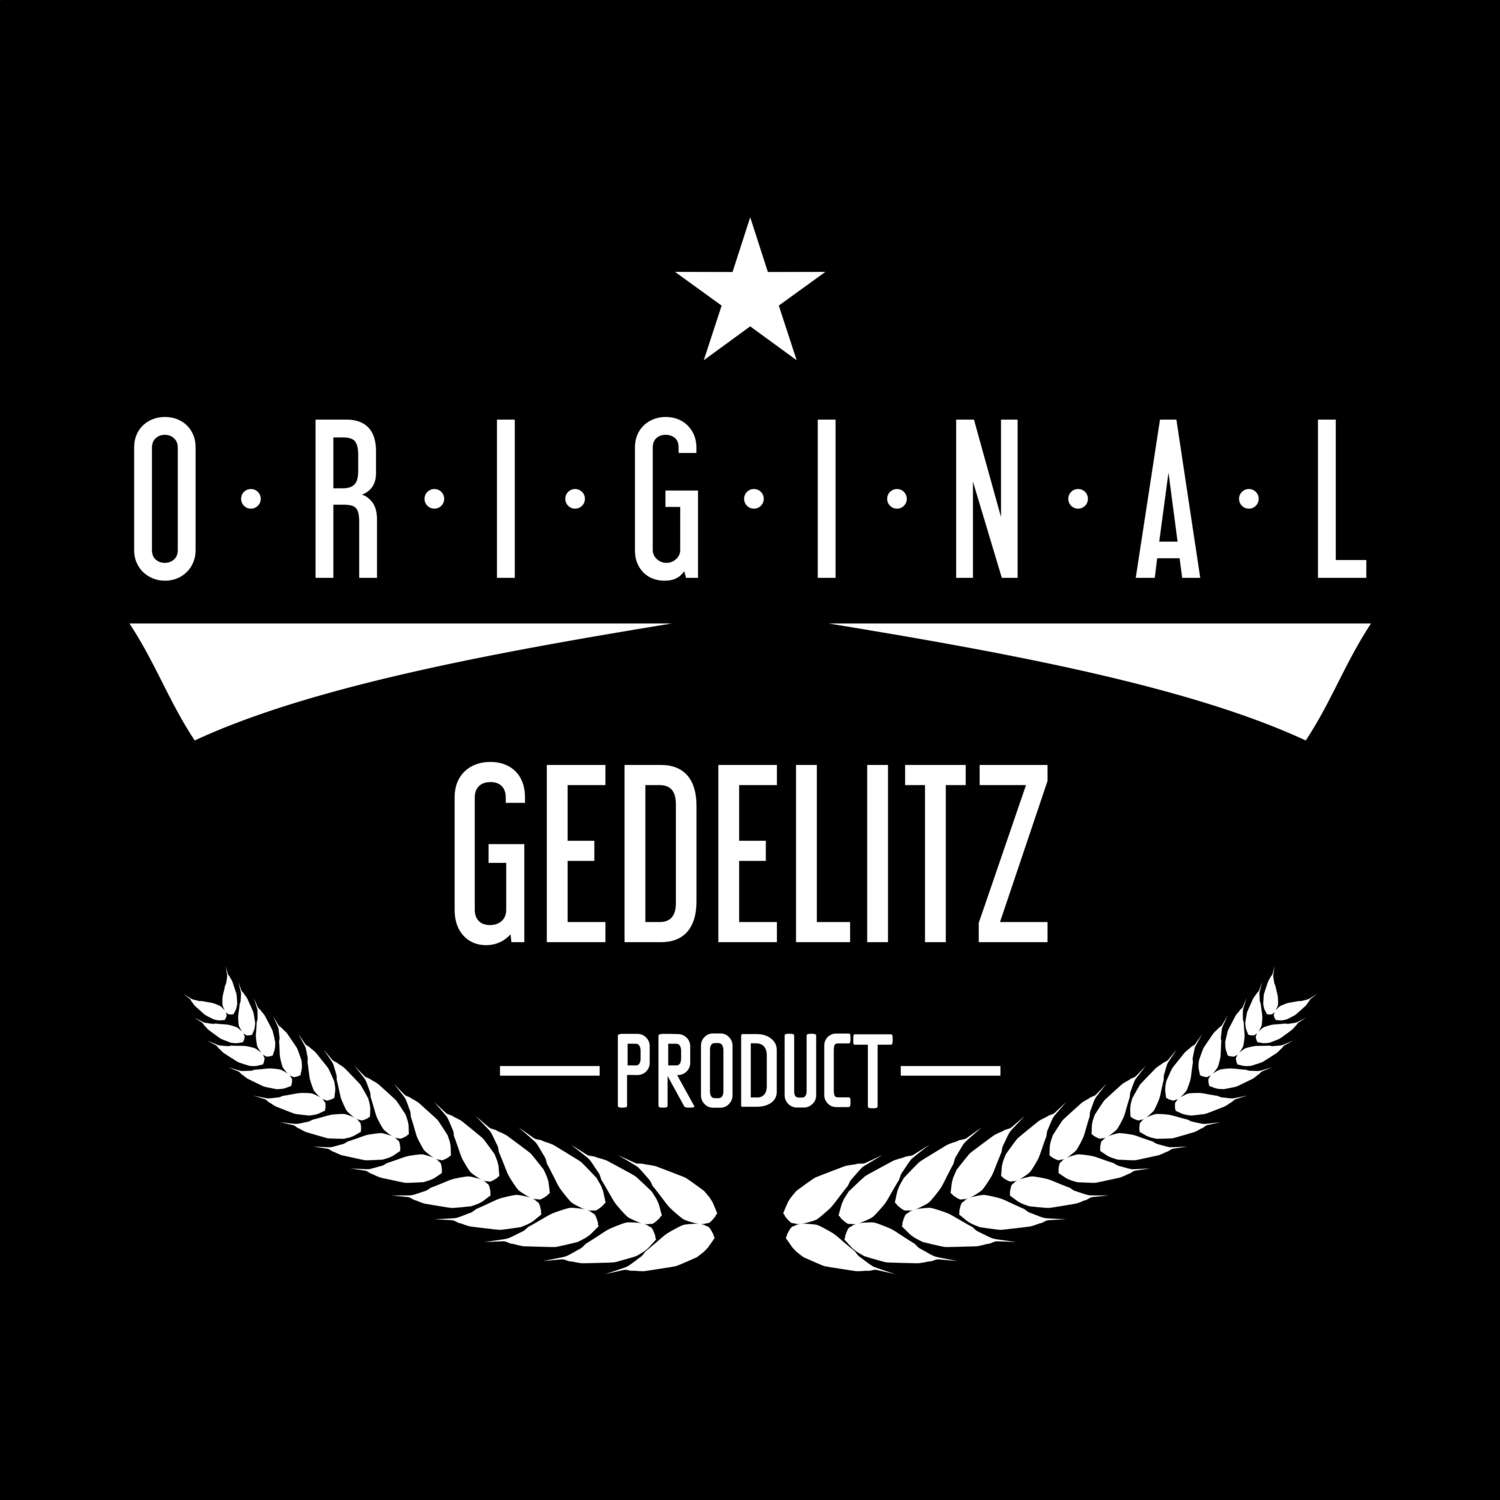 Gedelitz T-Shirt »Original Product«